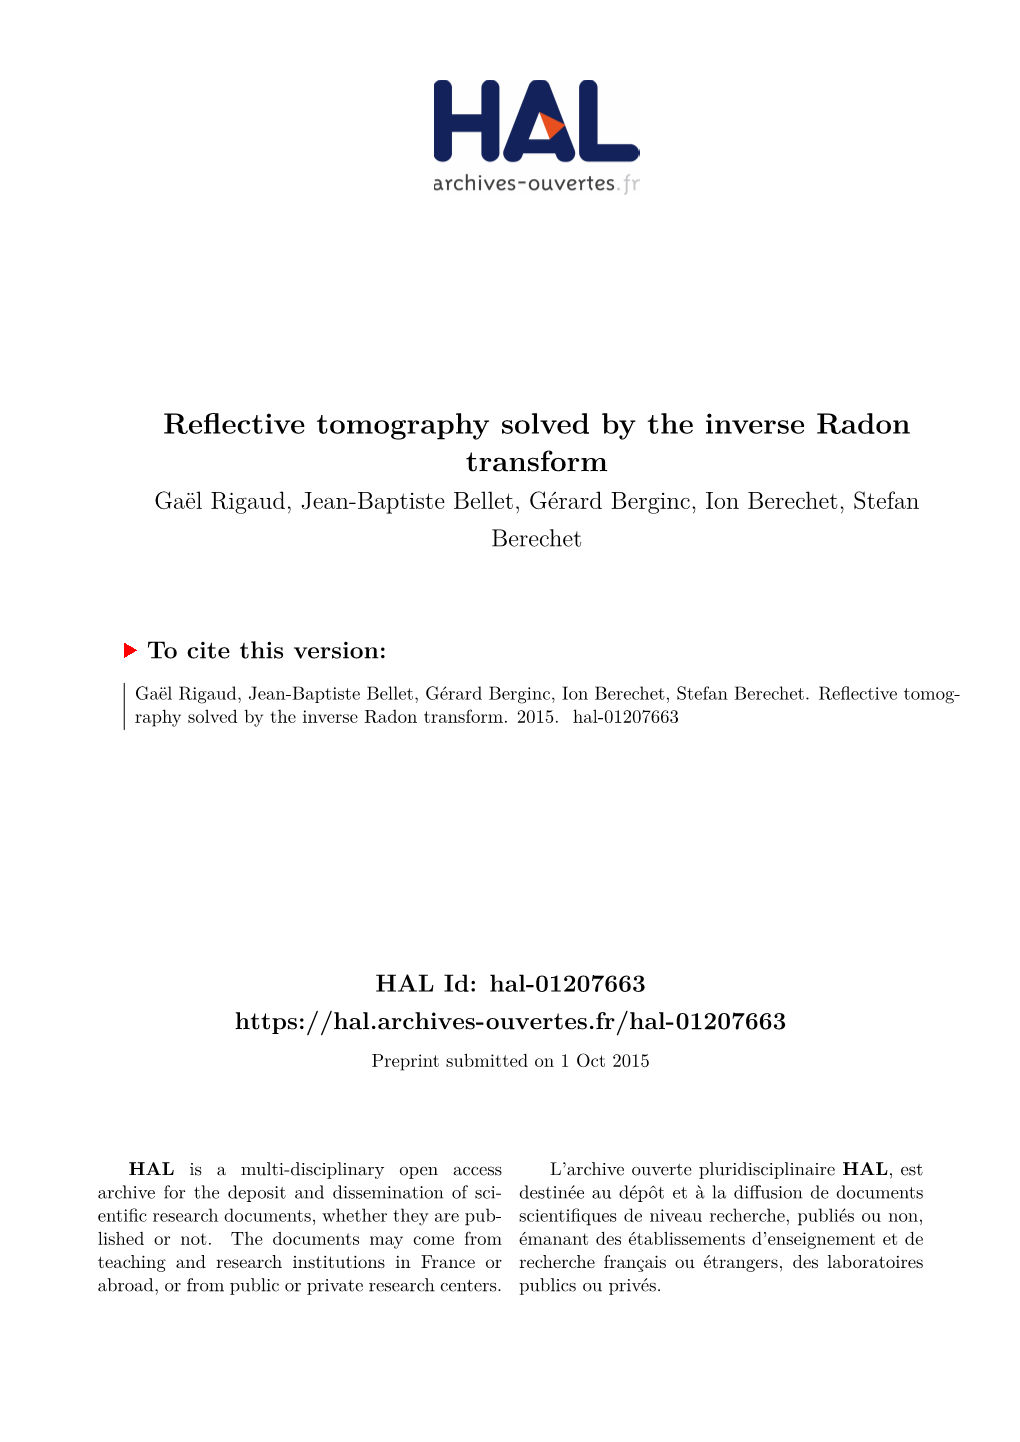 Reflective Tomography Solved by the Inverse Radon Transform Gaël Rigaud, Jean-Baptiste Bellet, Gérard Berginc, Ion Berechet, Stefan Berechet